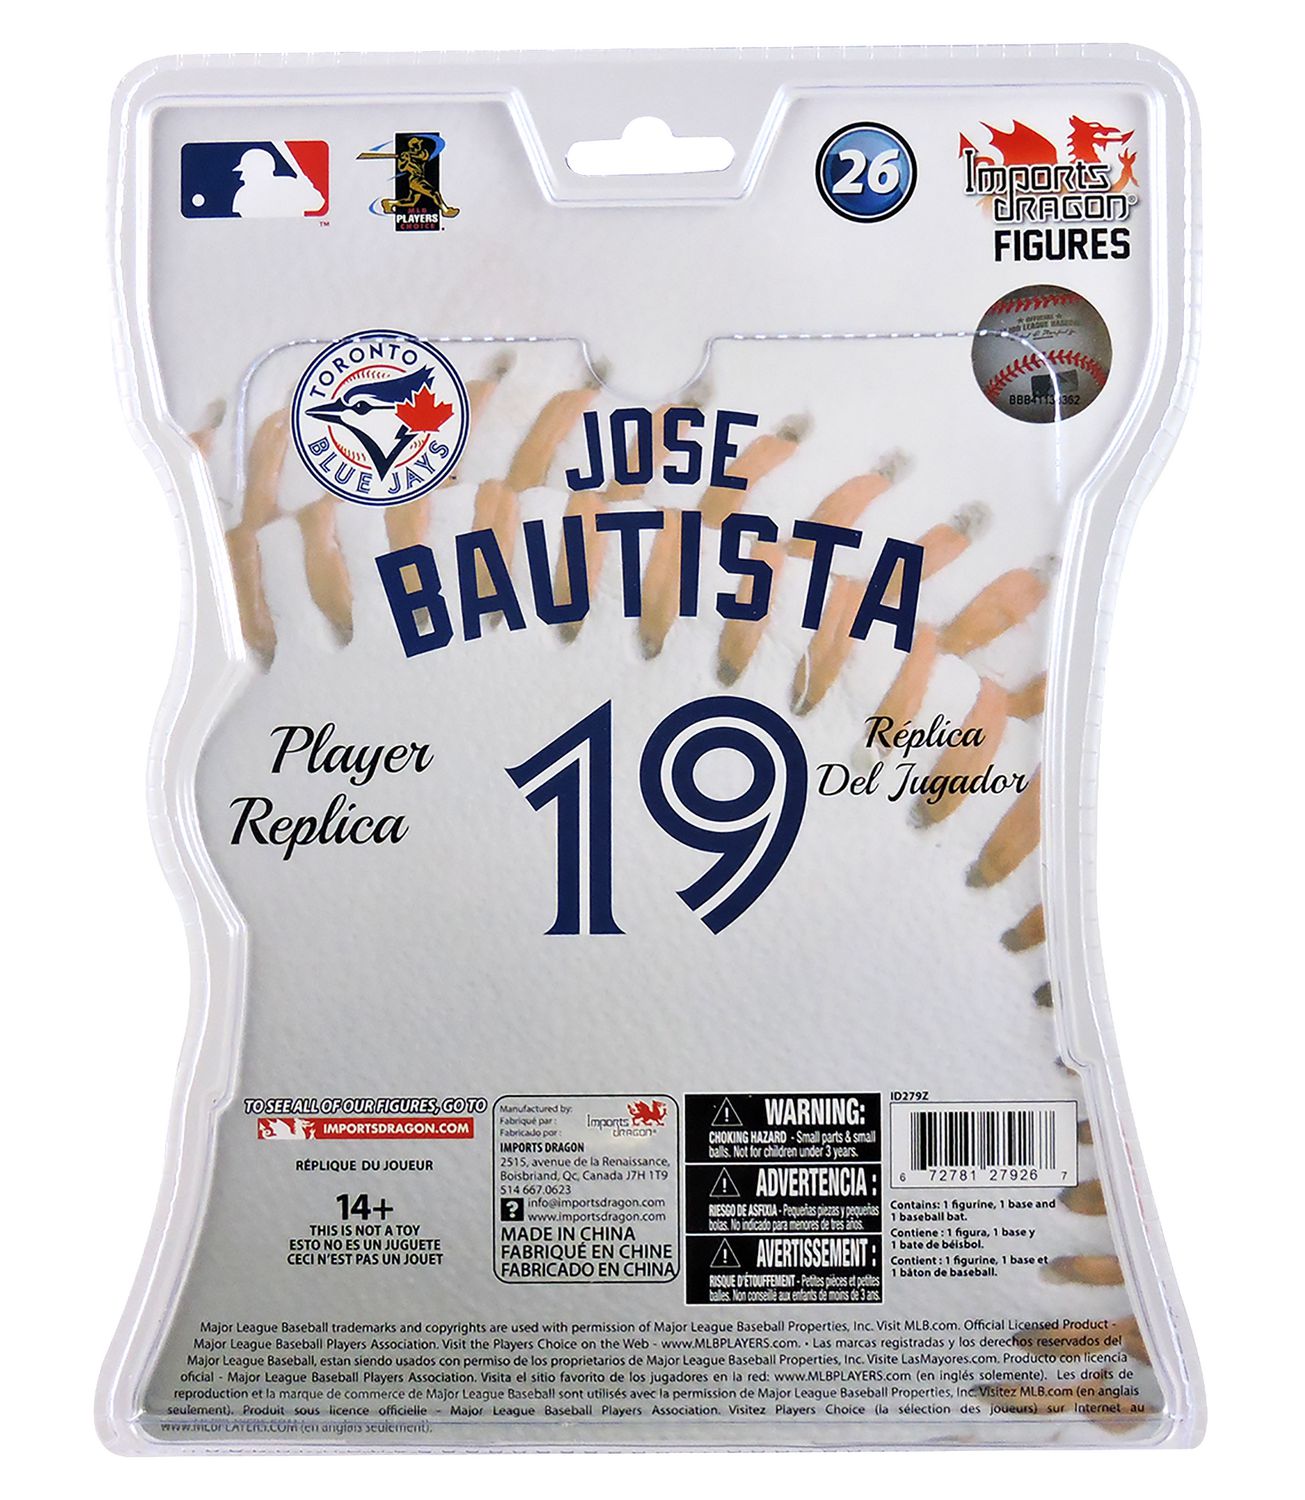 2009 Toronto Blue Jays SIGNED Topps JOSE BAUTISTA WalMart Black Border #261  COA